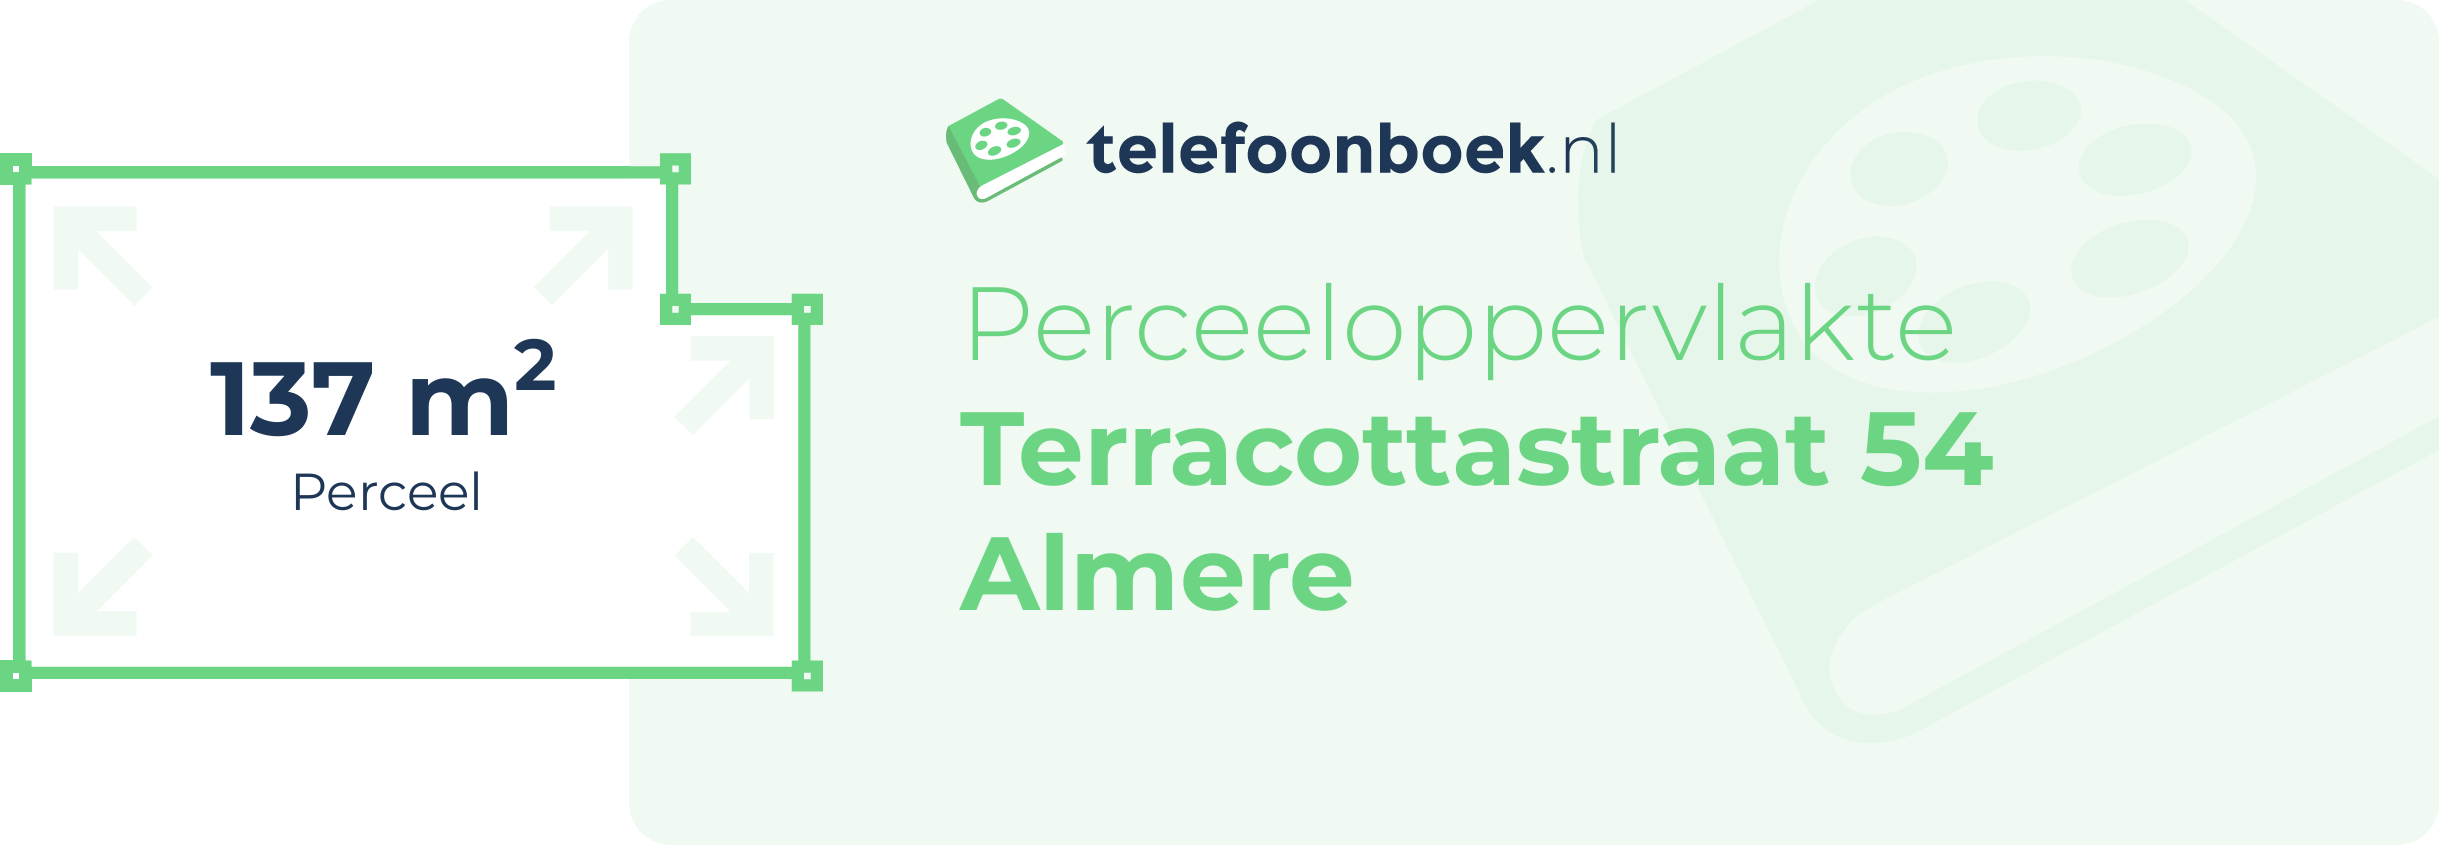 Perceeloppervlakte Terracottastraat 54 Almere